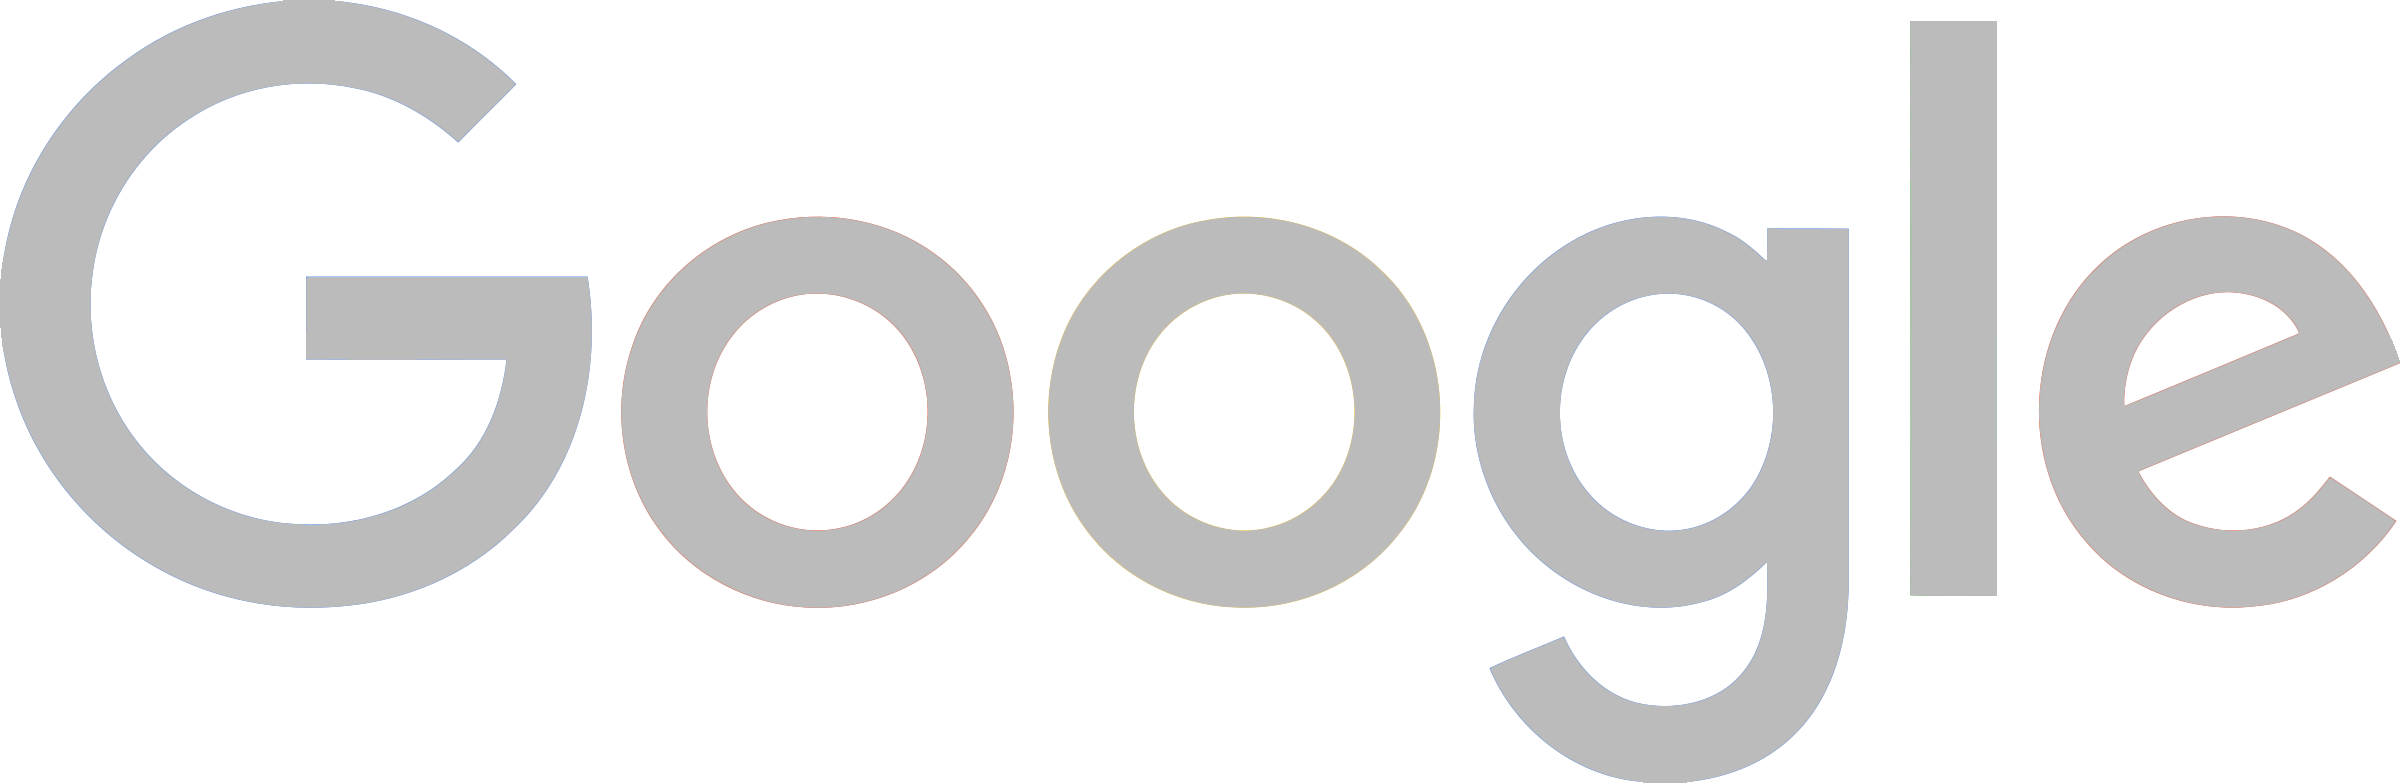 google-2015-logo-png-transparent.png